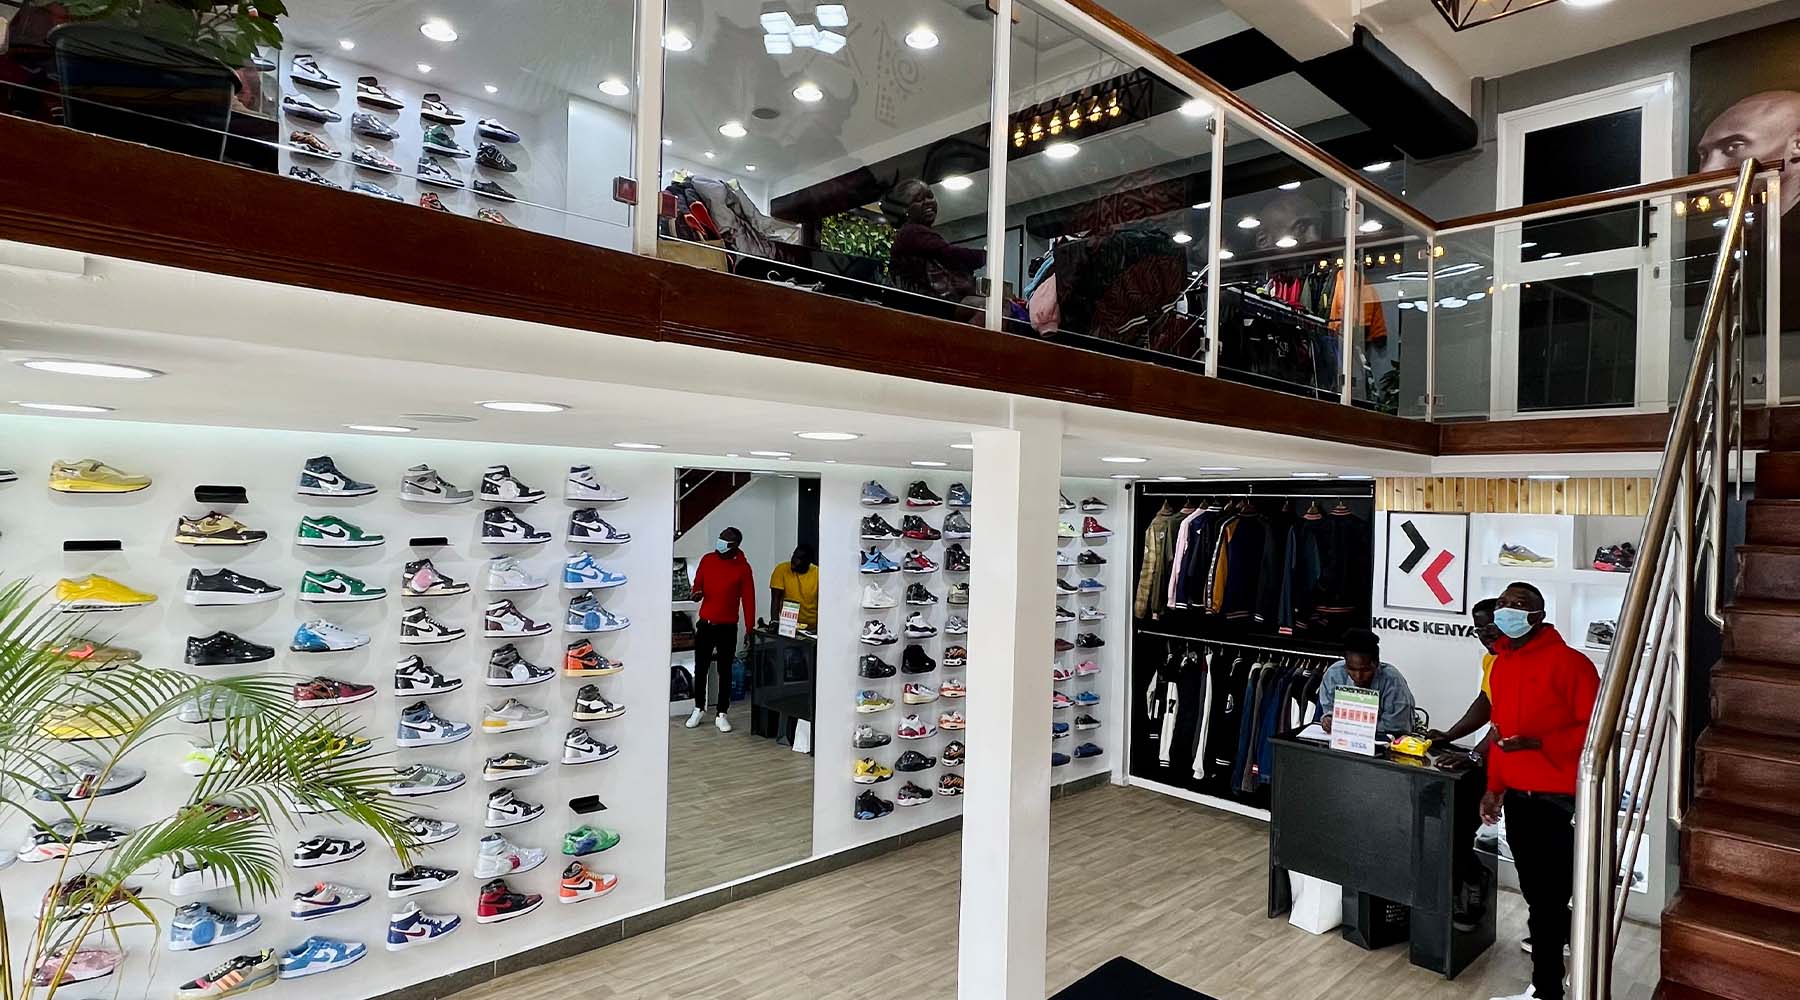 Kenyan Sneaker Culture